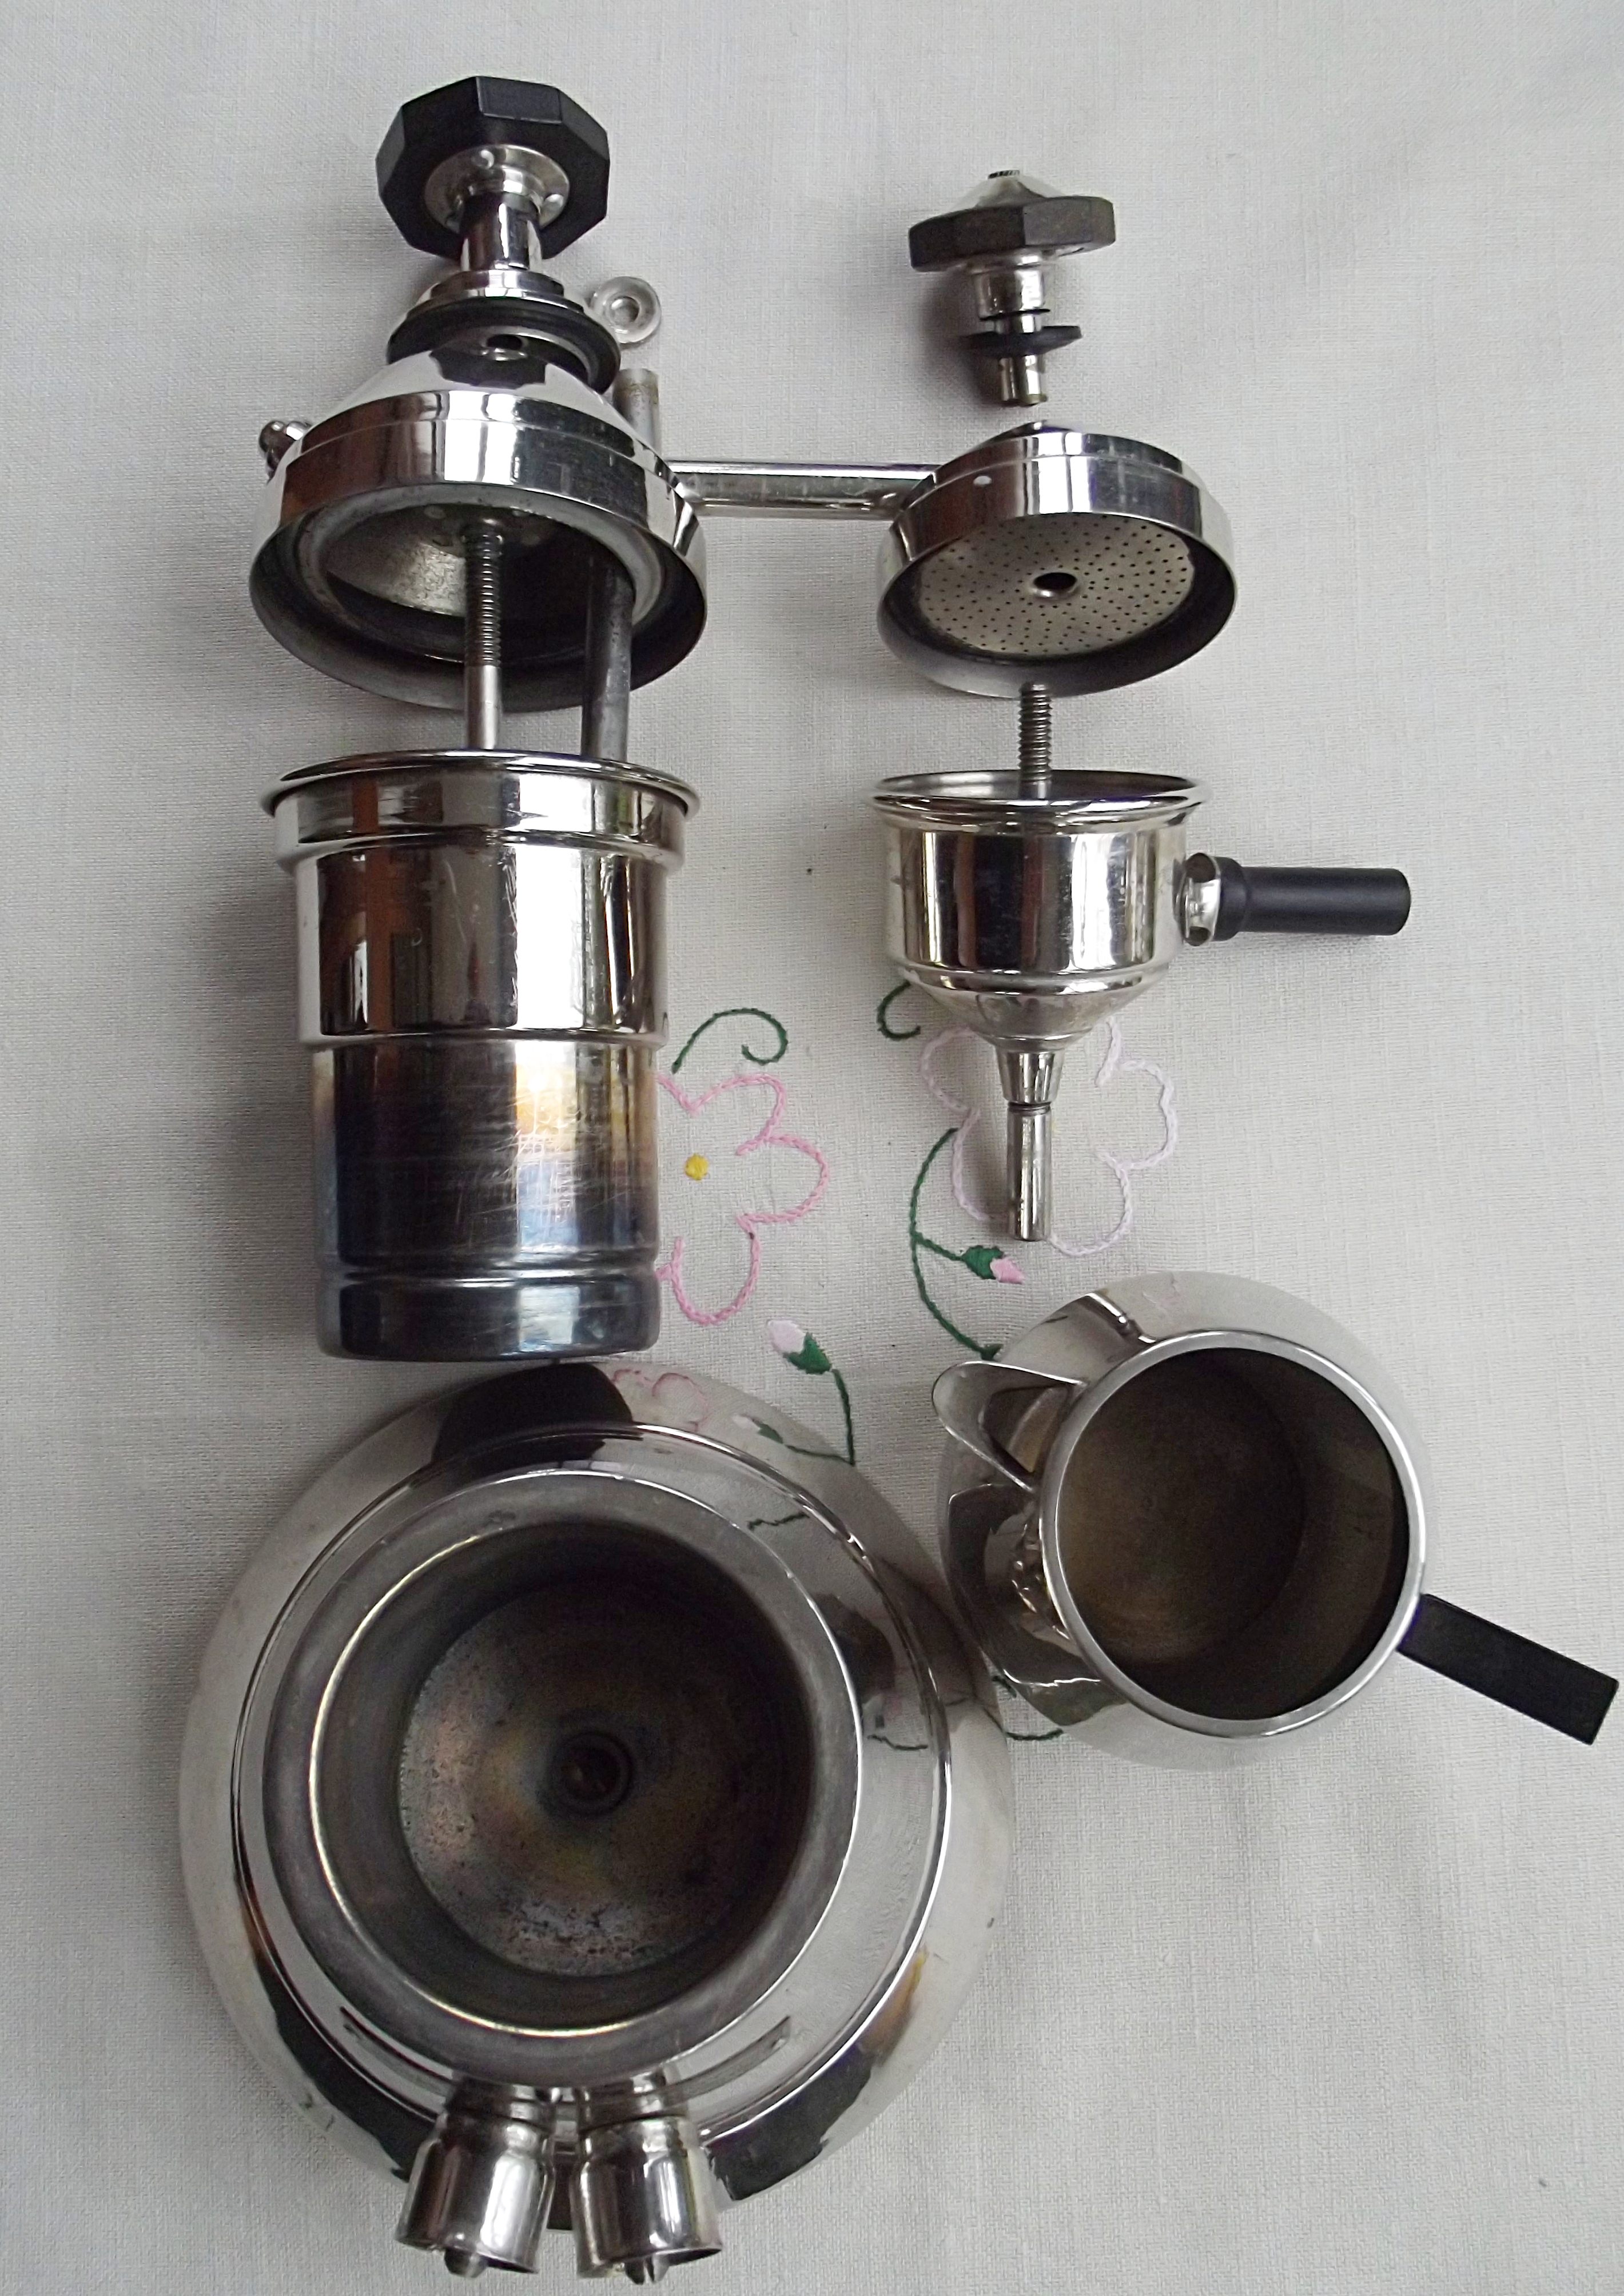 File:Macchina caffè elettrica smontata.jpg - Wikimedia Commons